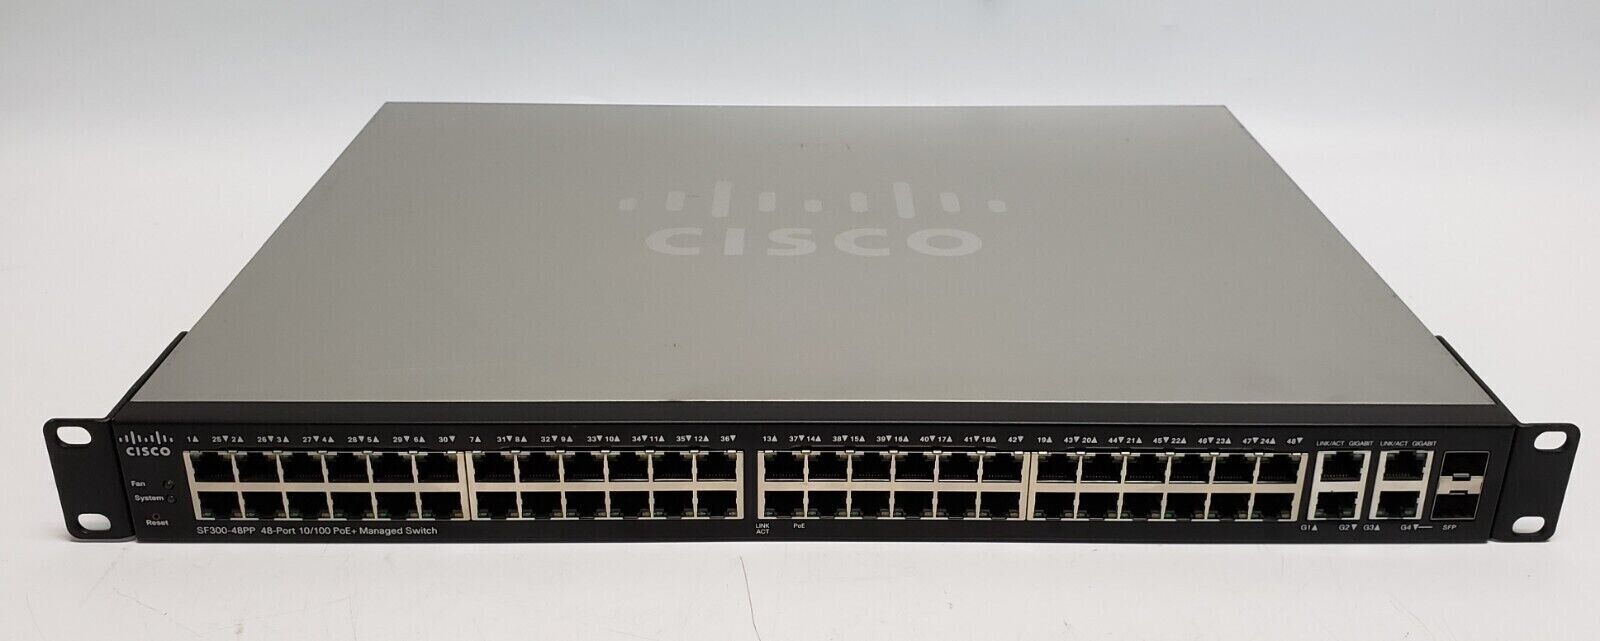 Cisco SF300-48PP-K9 48-Port 10/100 PoE+ Managed Switch